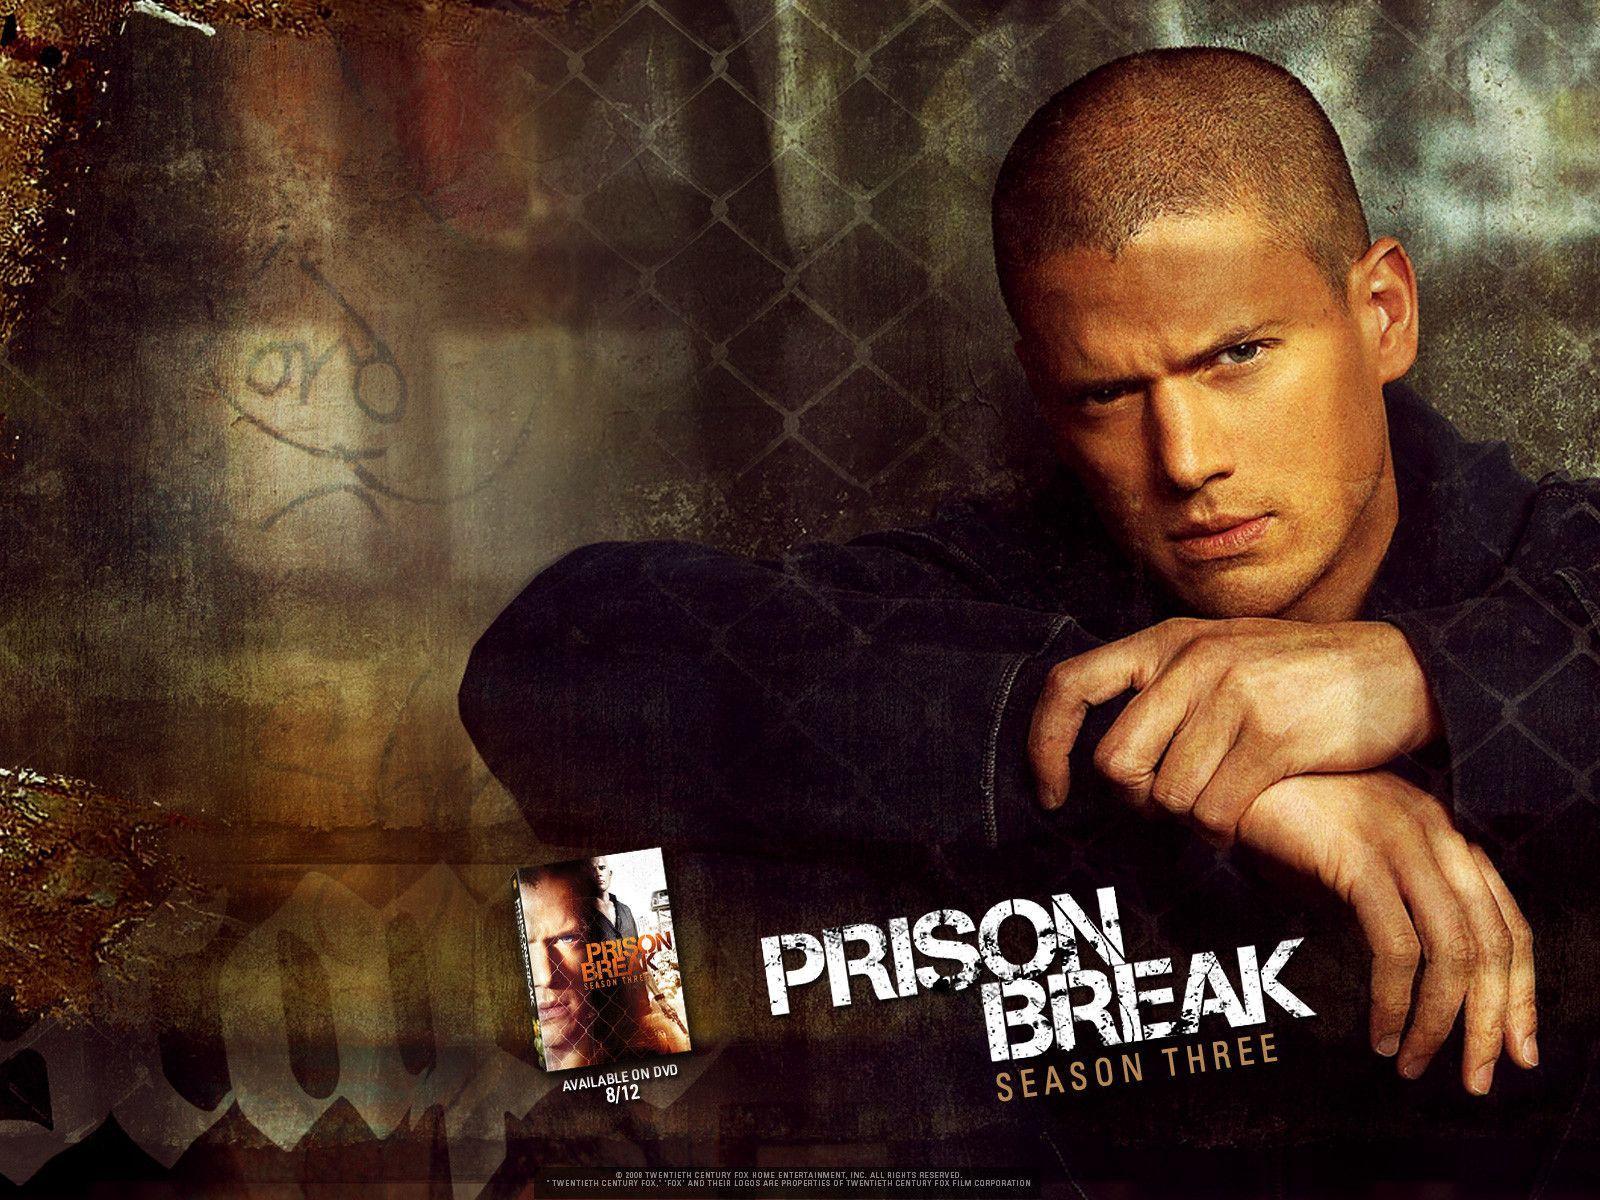 Prison Break season 4 is coming! Season 3 DVDS now available